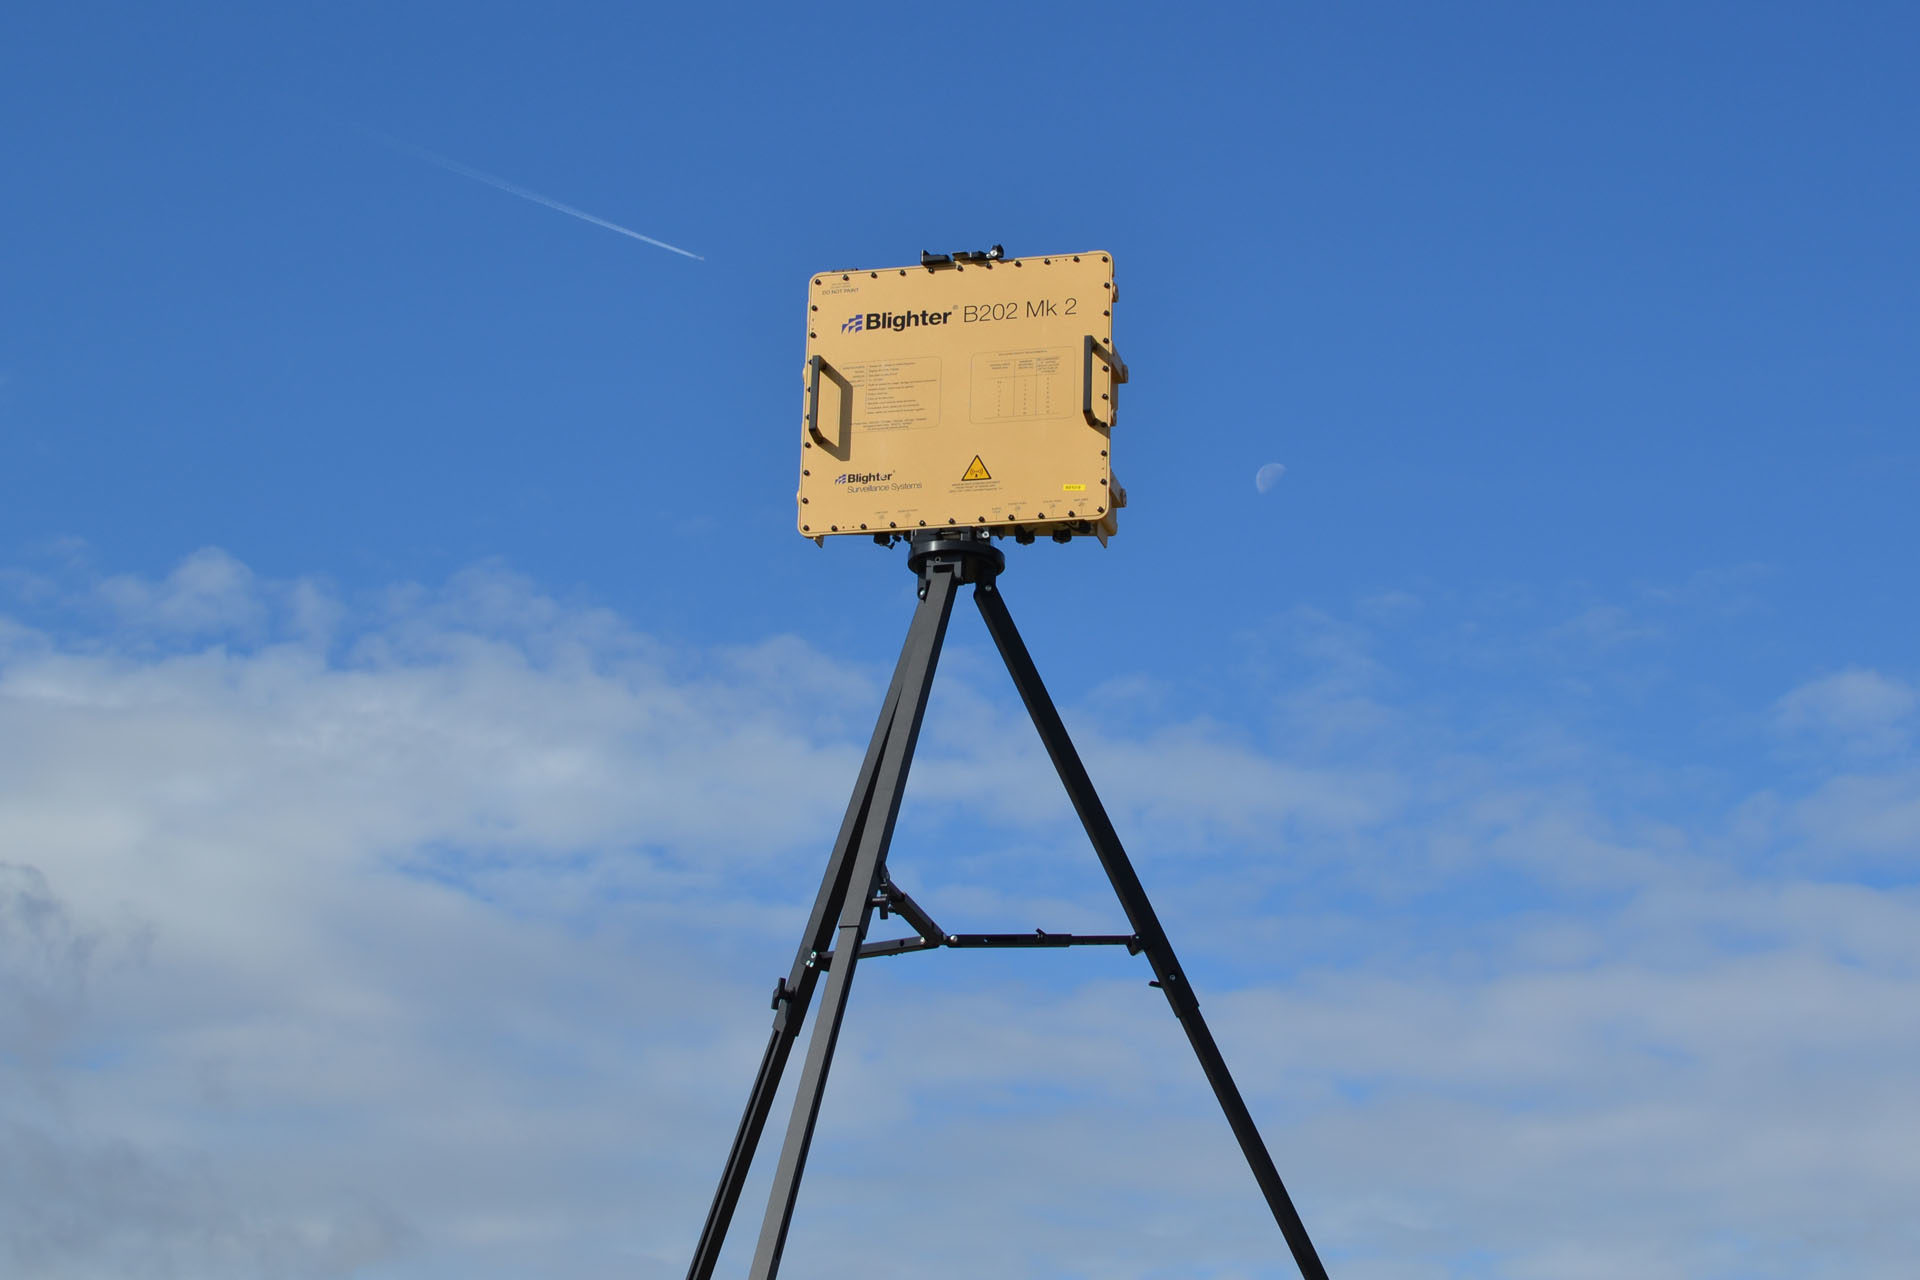 Blighter B202 Mk 2 Man Portable Ground Surveillance Radar on Tripod (Light Stone) (Rear View)